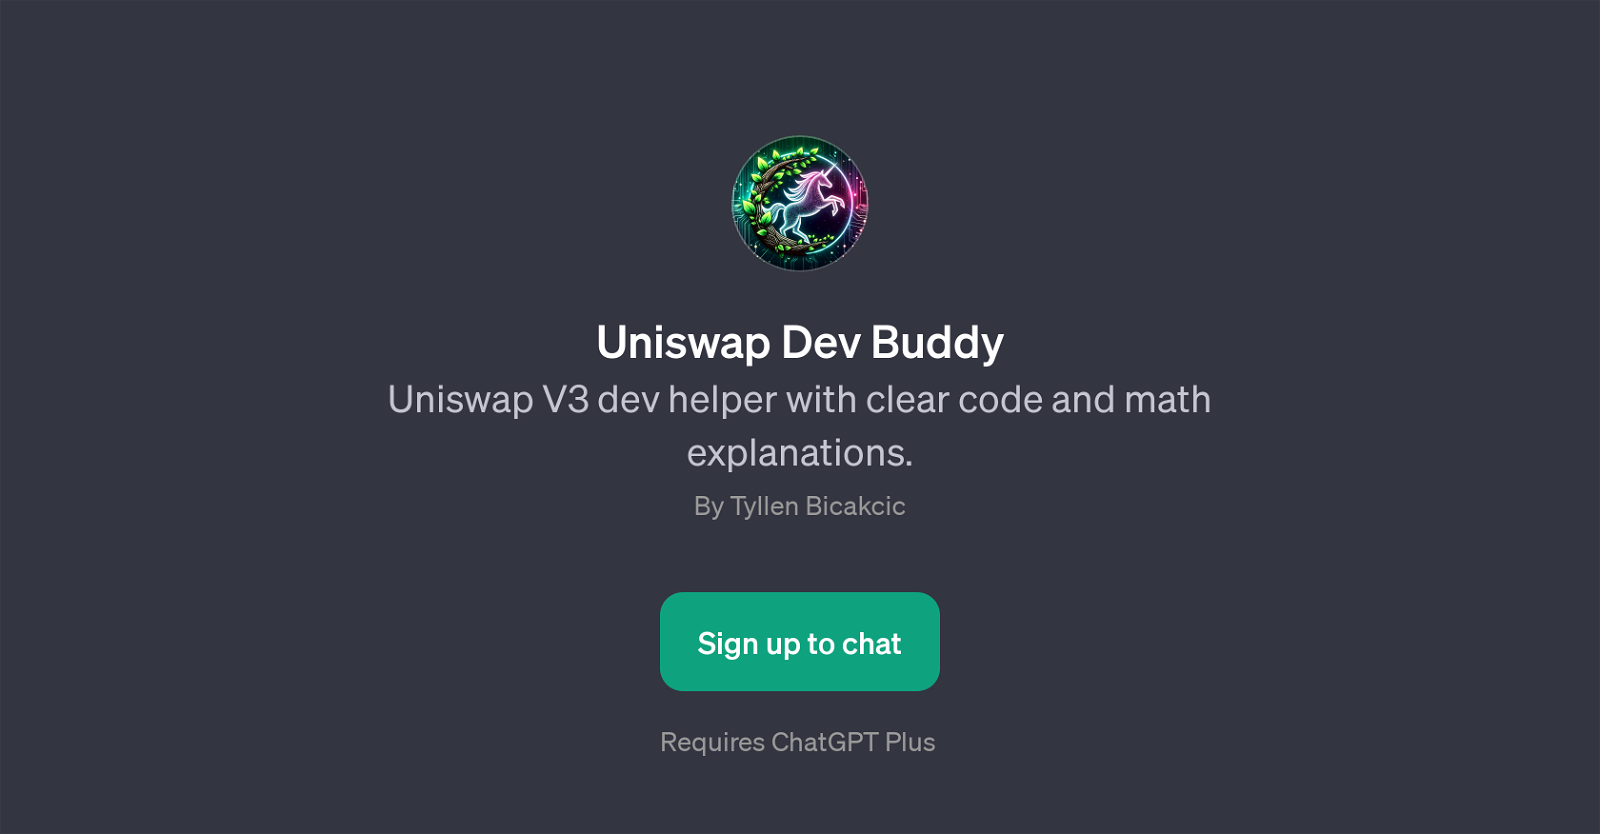 Uniswap Dev Buddy website